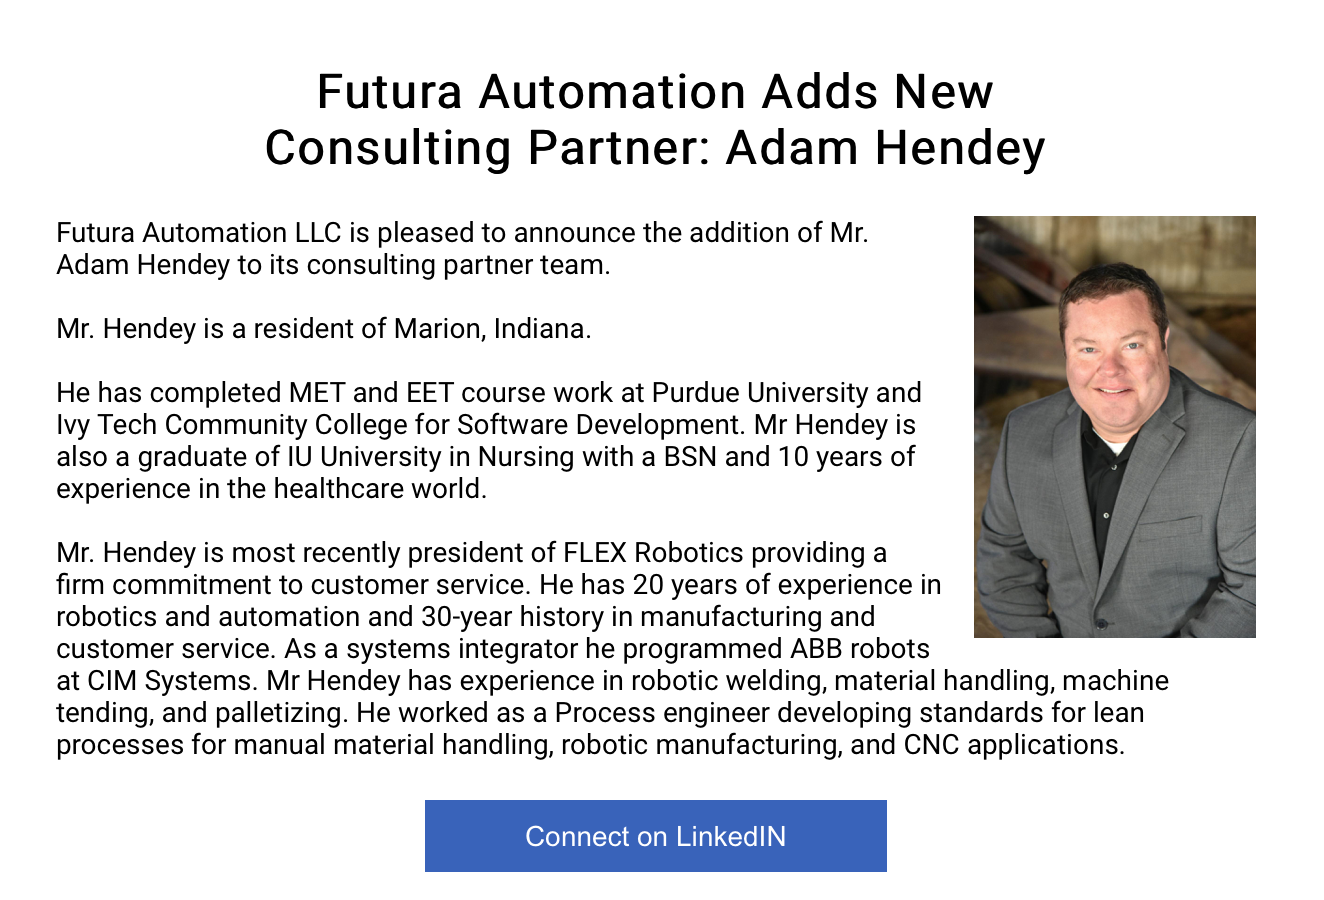 Futura Automation welcome Adam Hendey